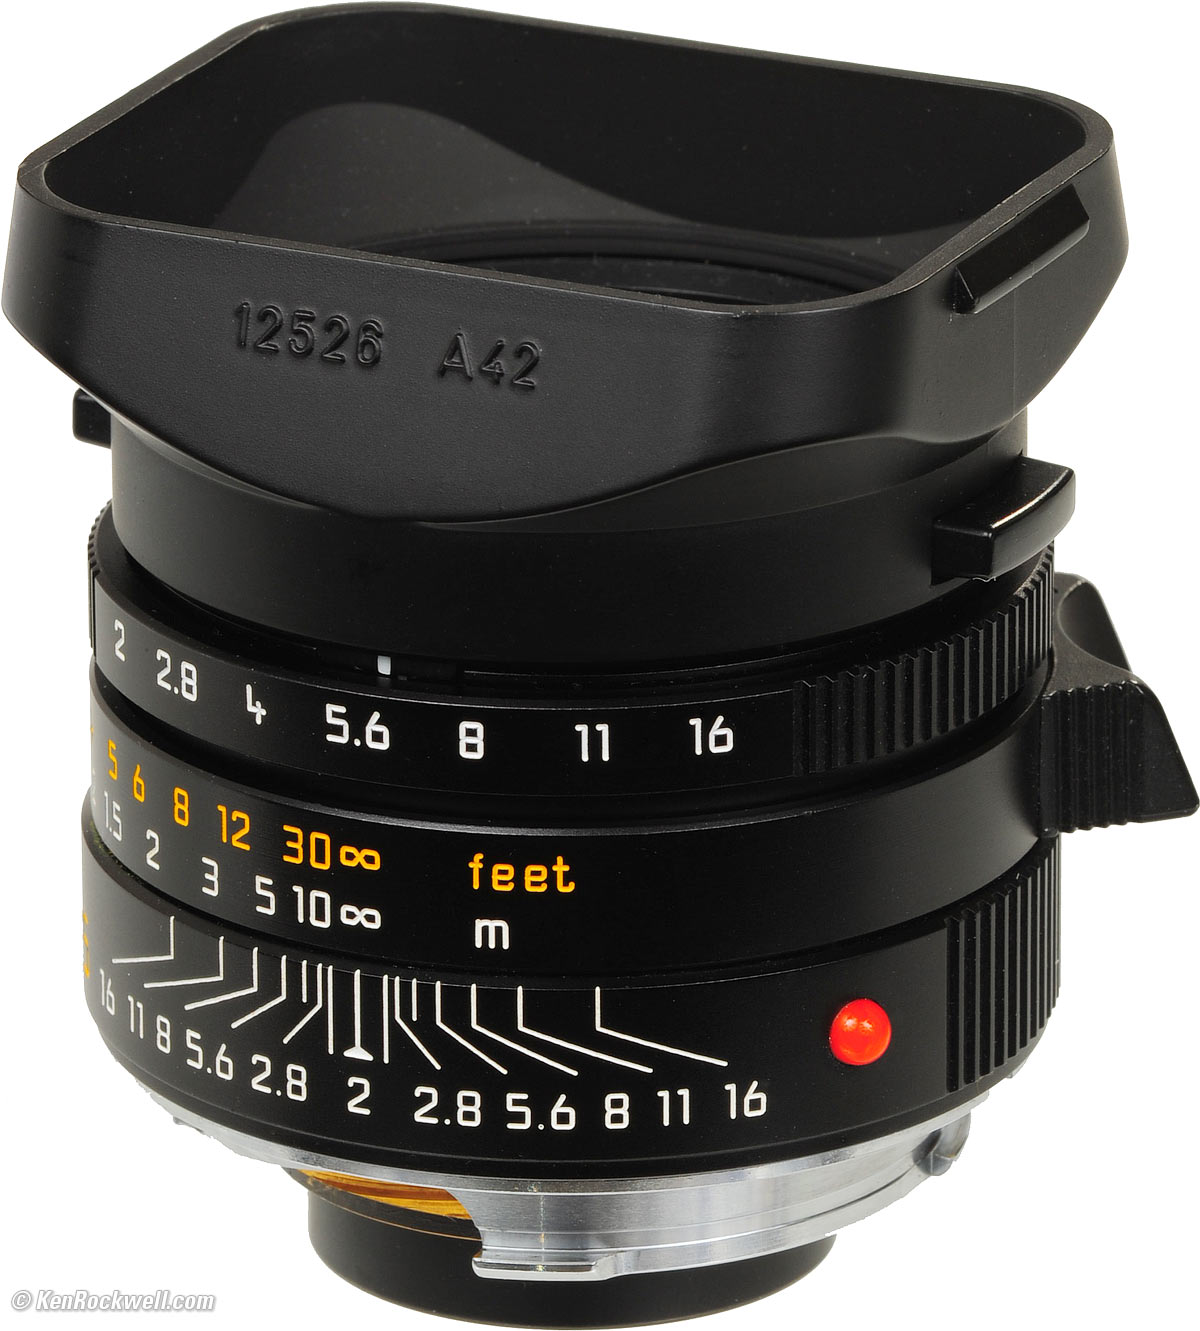 Leica 35mm f/2 SUMMICRON-M ASPH